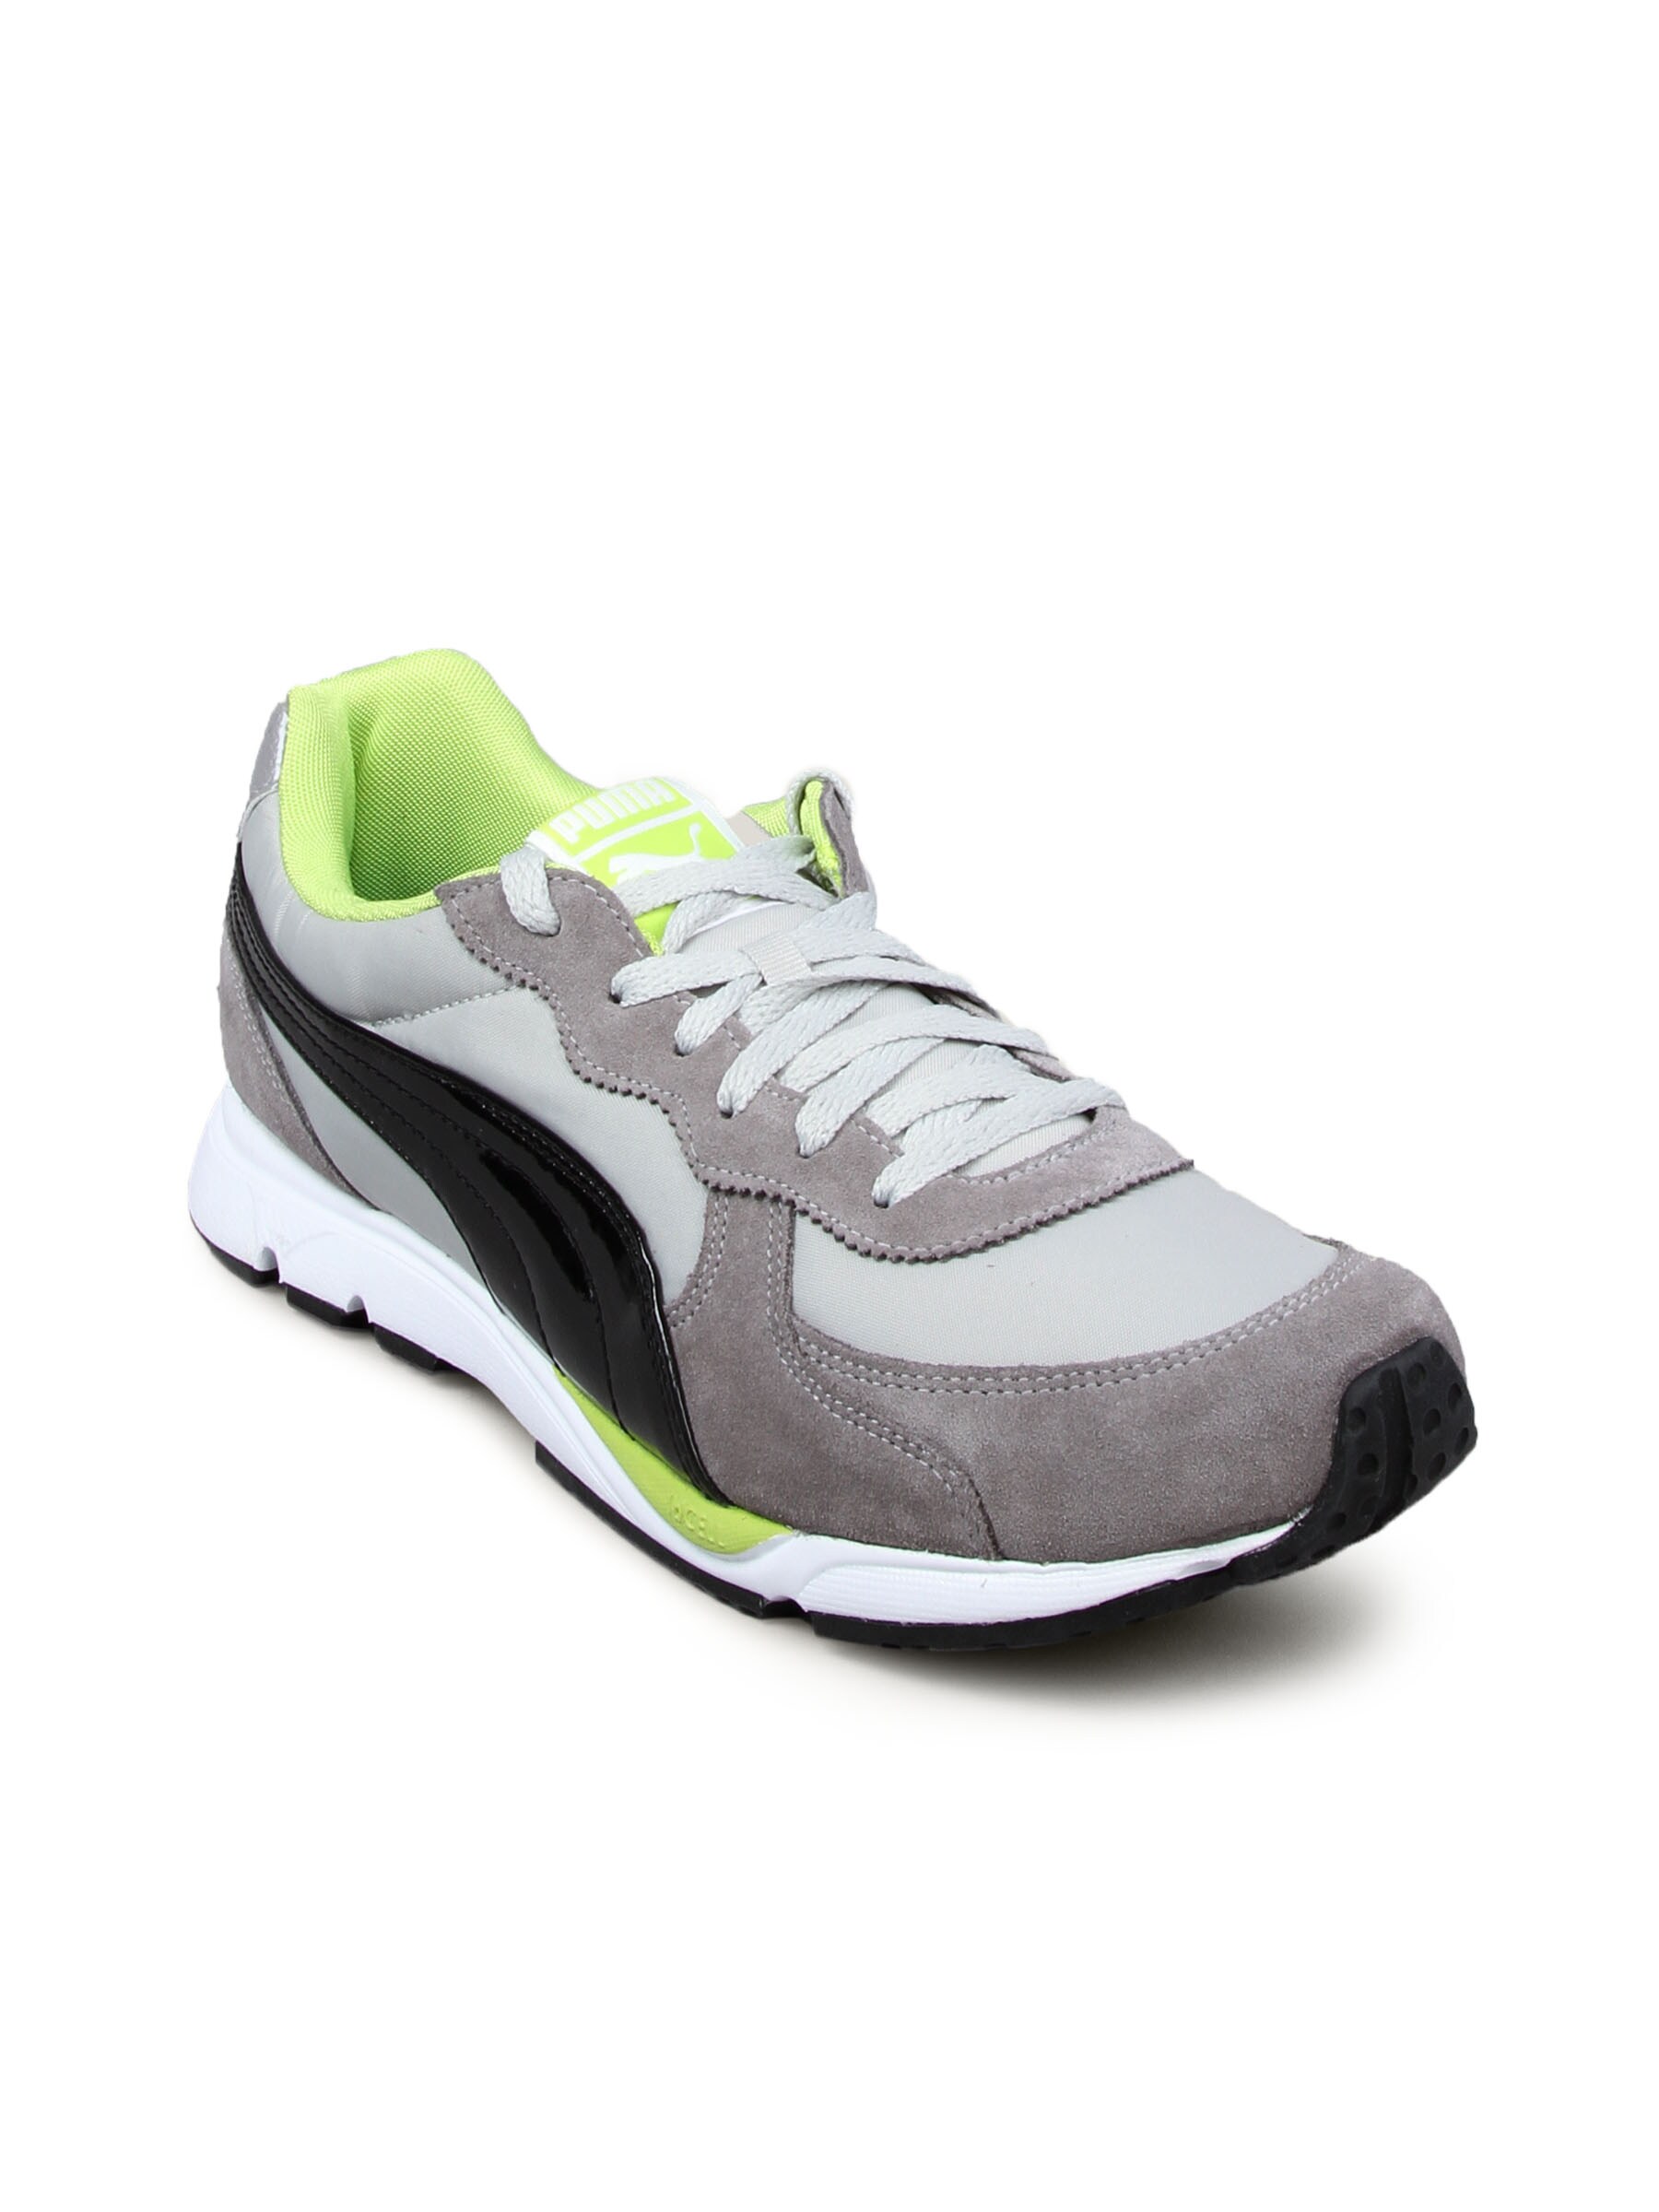 Puma Men's Vesta Runner Grey Shoe